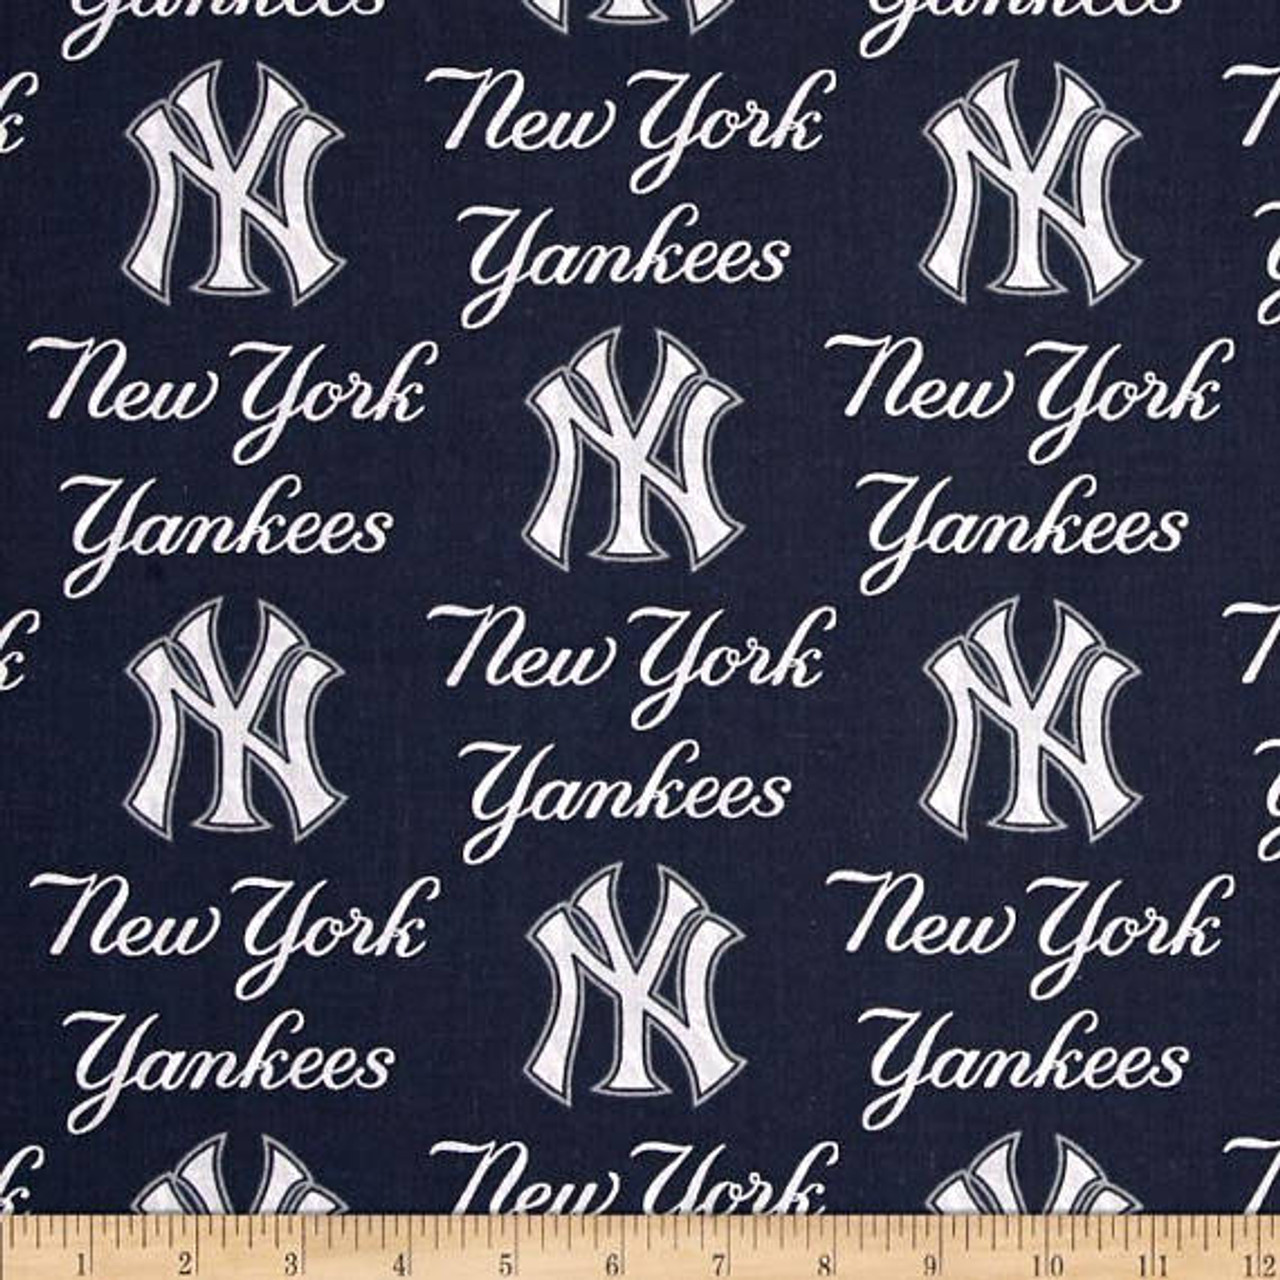 New York Yankees Greek Letter Apparel